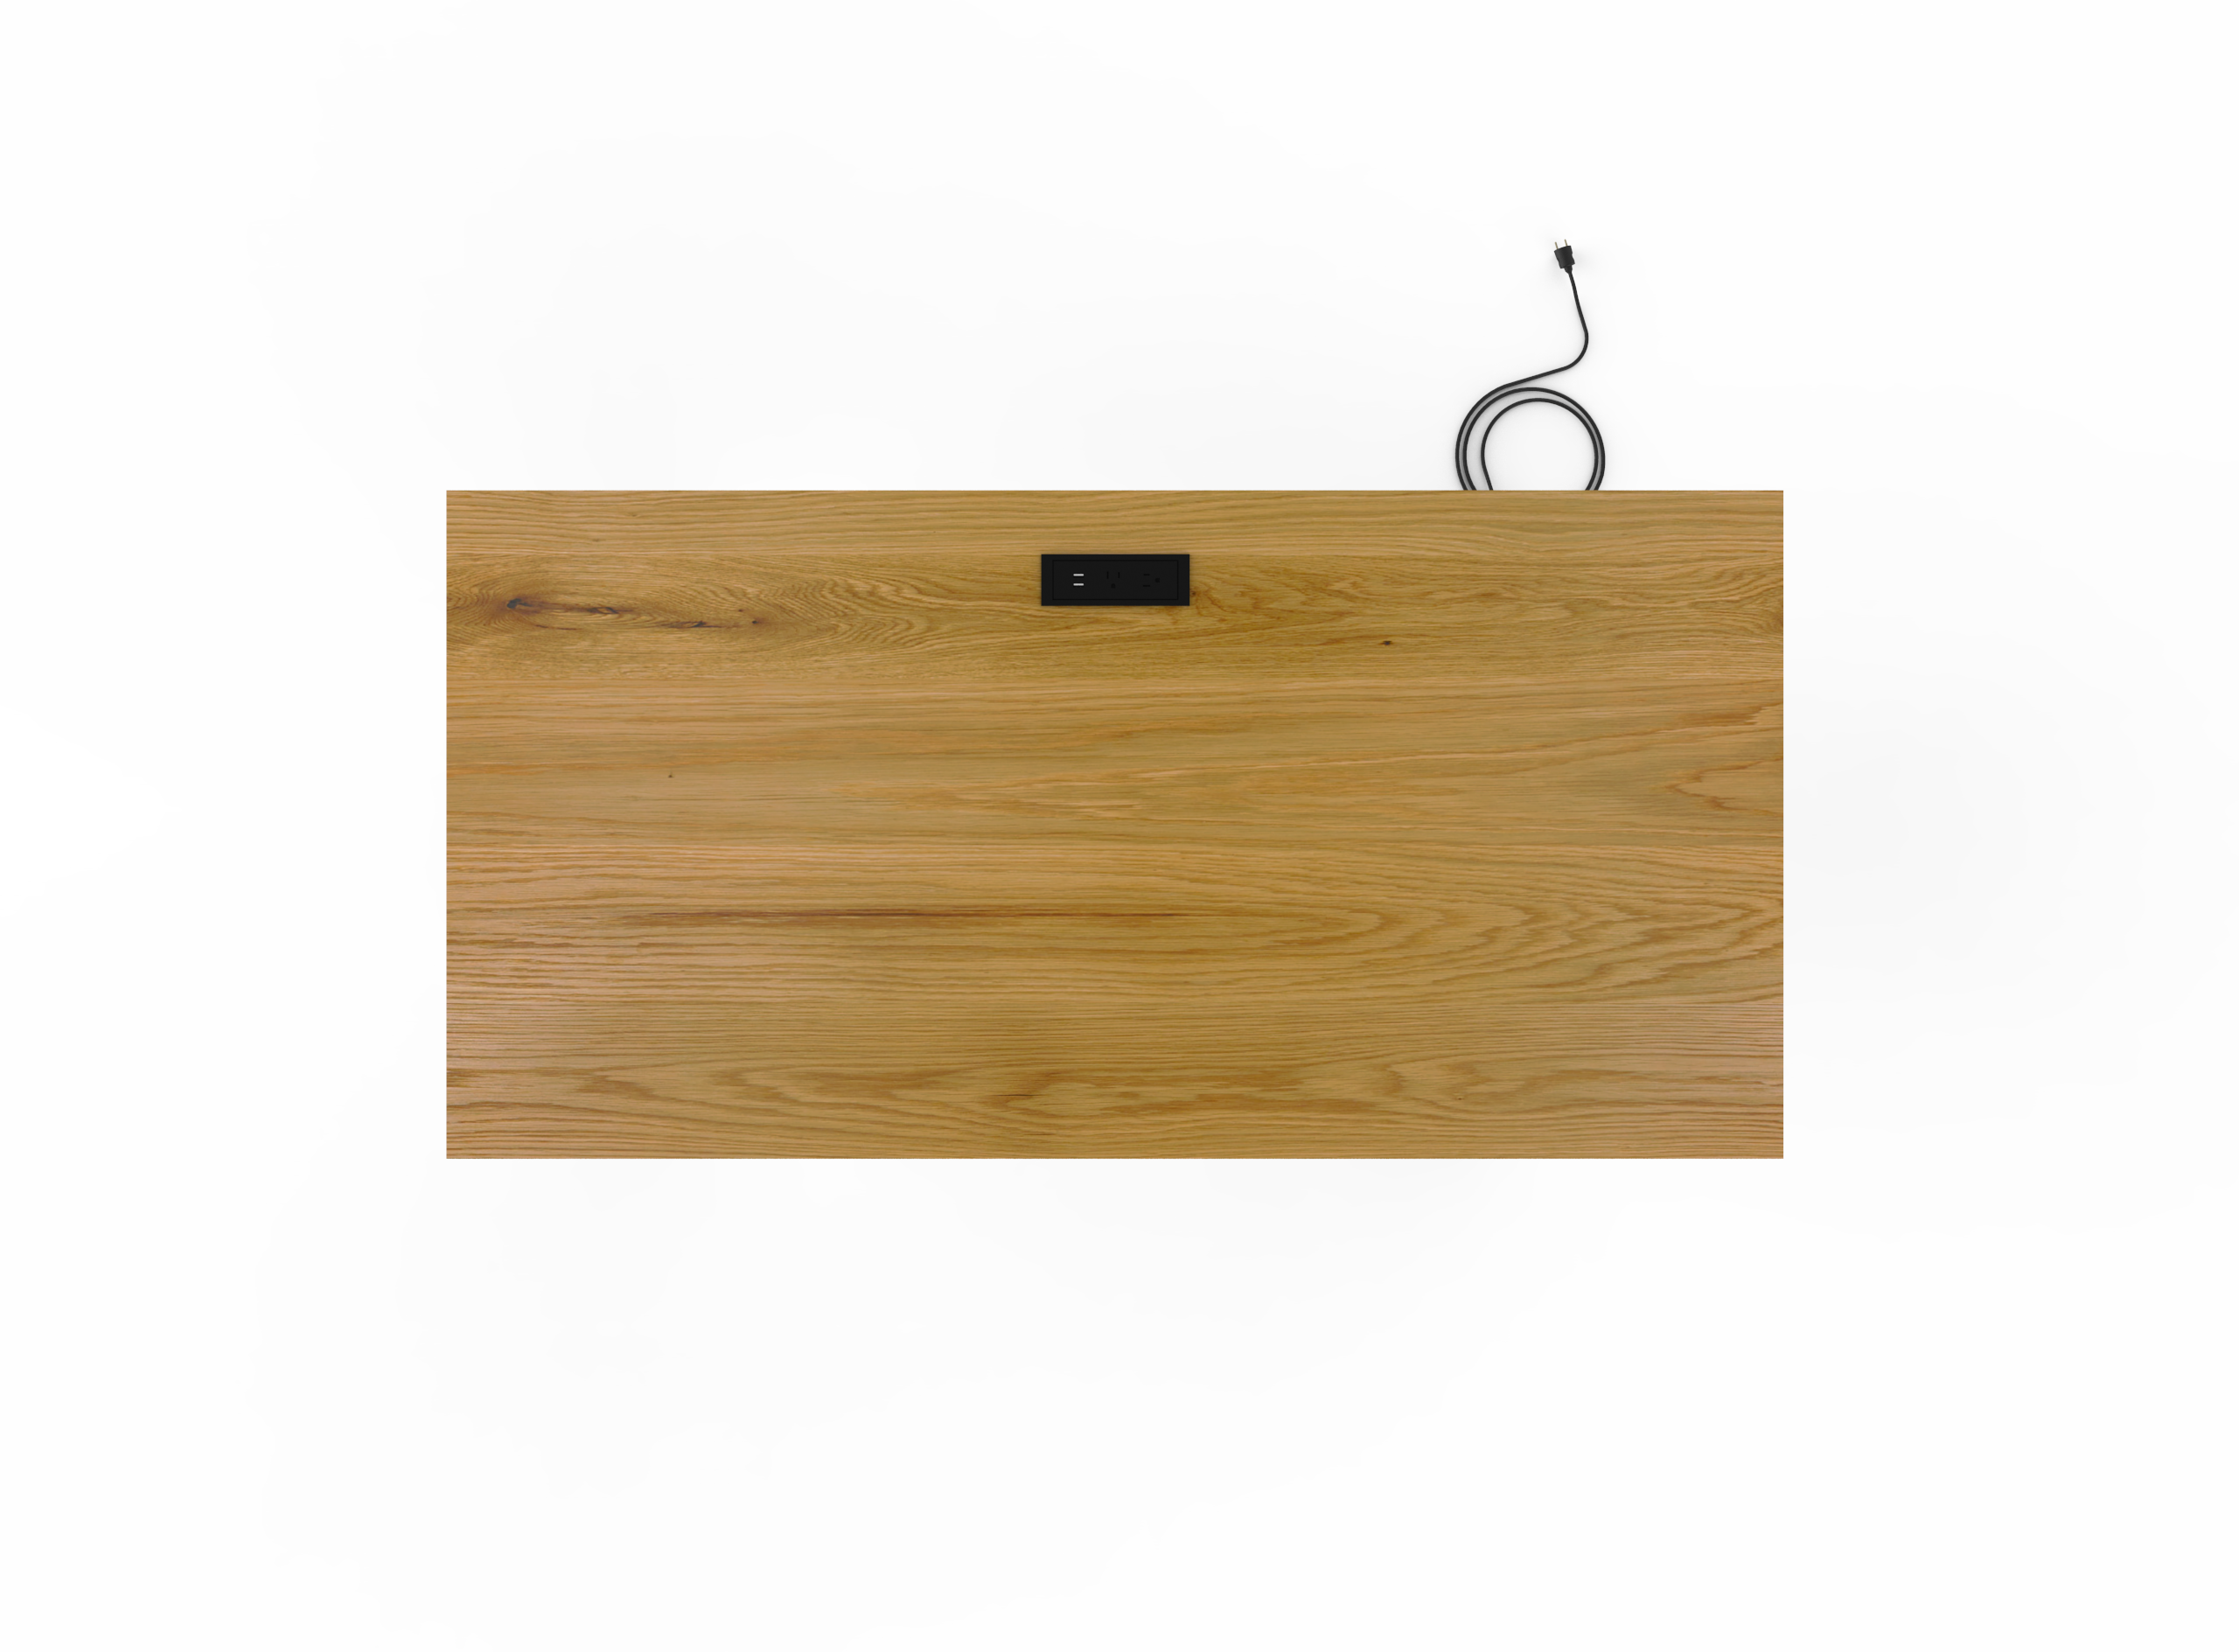 Vermont Farm Table Detail Custom Wood Desk A Frame 30X60 003 White Oak Plan 